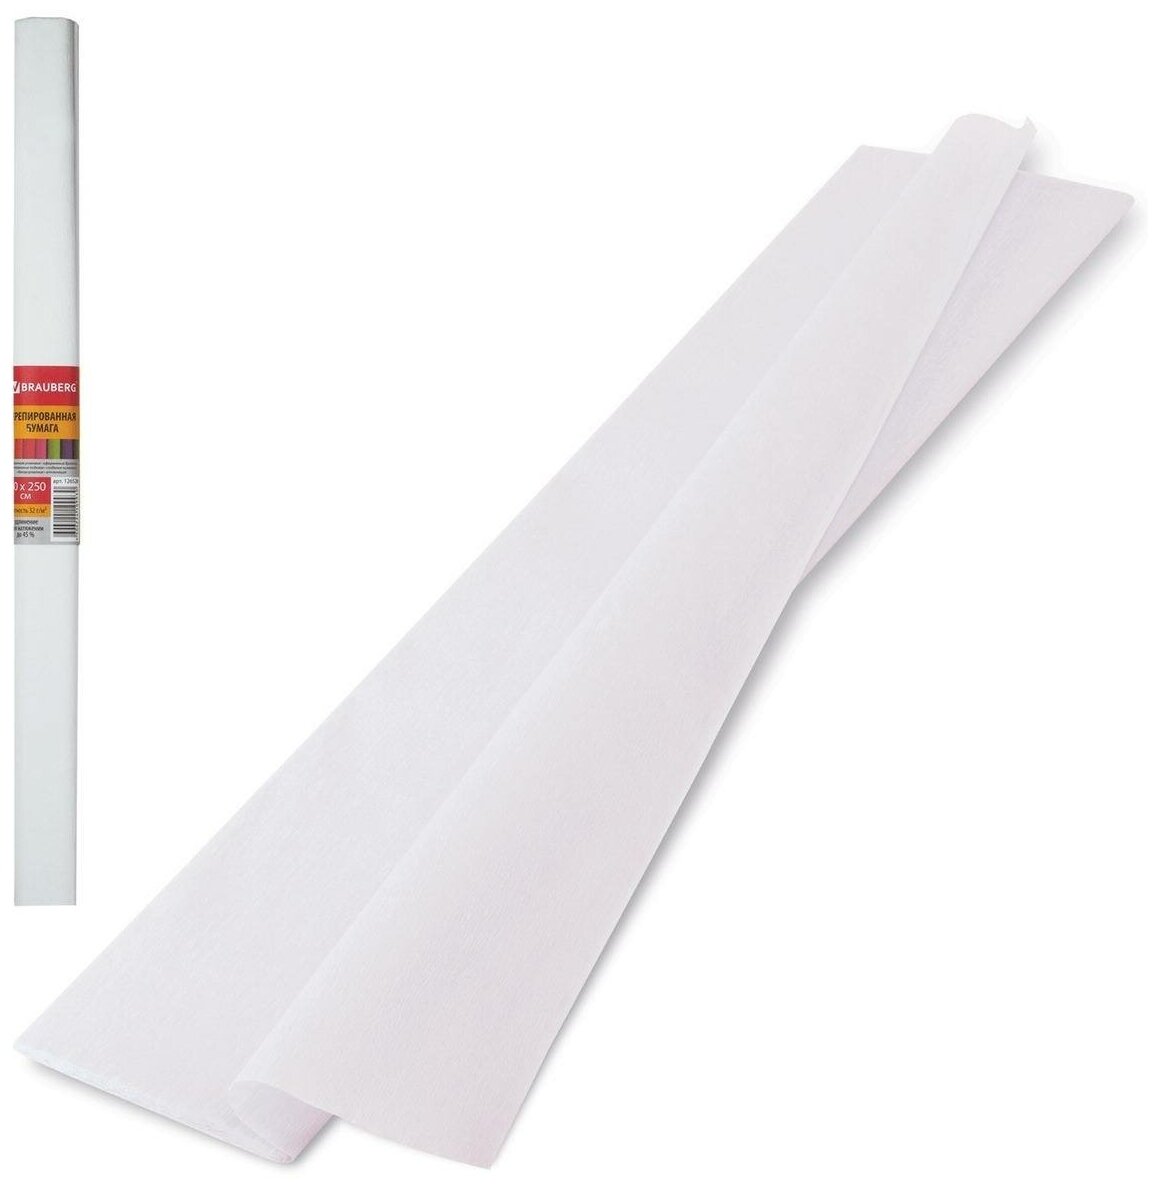 Цветная бумага Brauberg крепированная плотная, растяжение до 45%,32 г/м, рулон, белая, 50х250 см (126528)